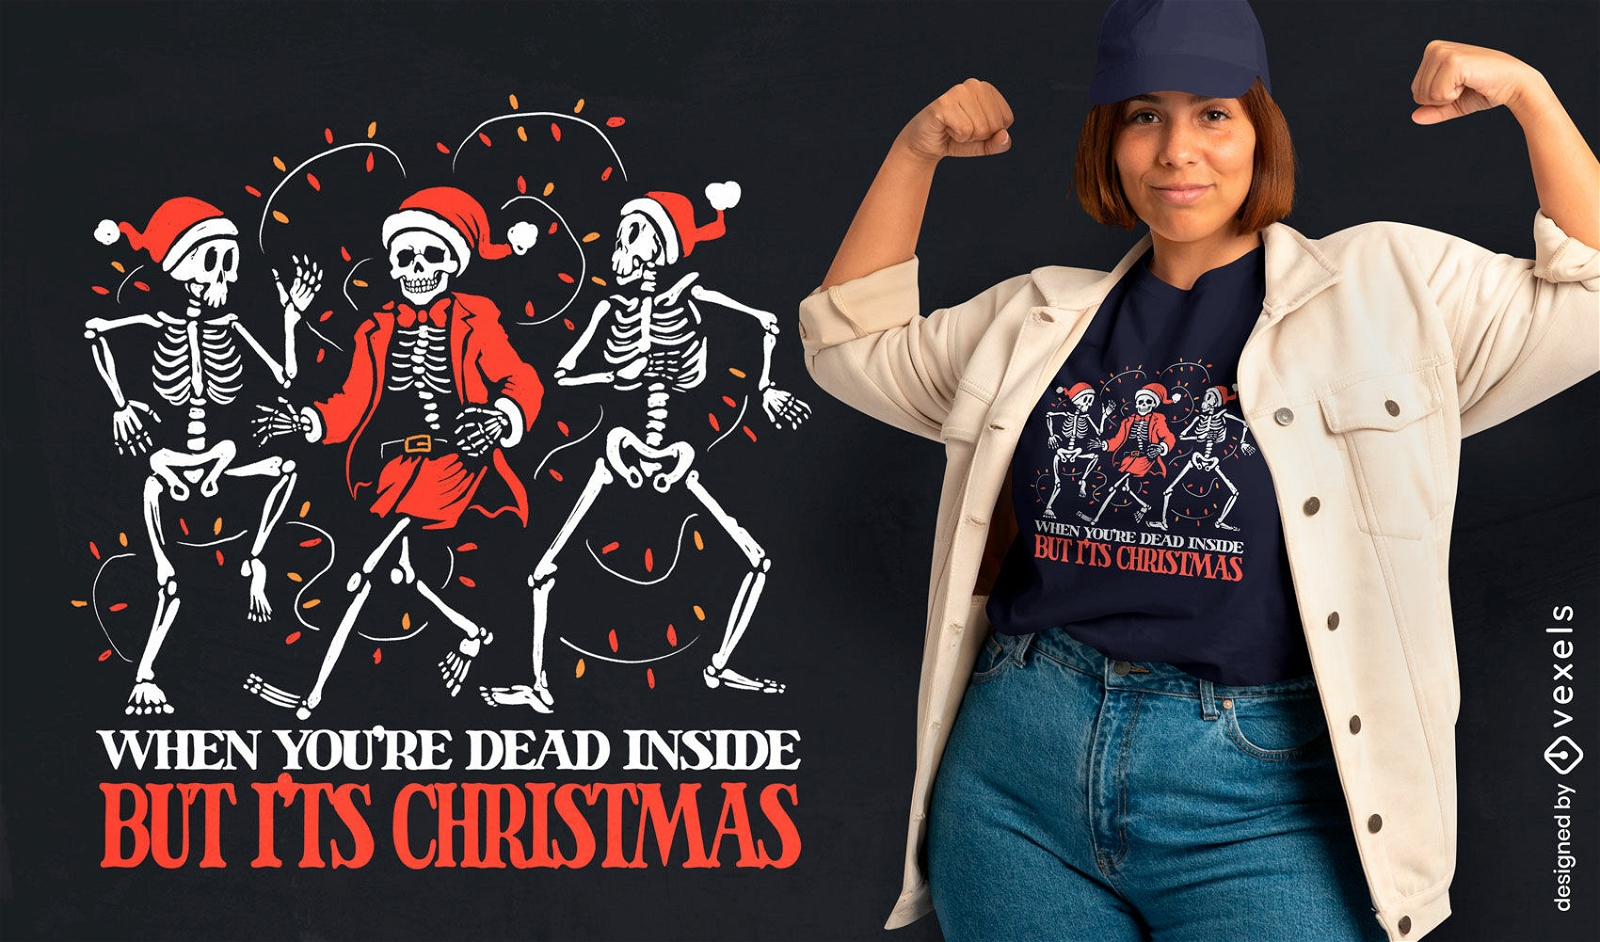 Skeletal Christmas dance t-shirt design